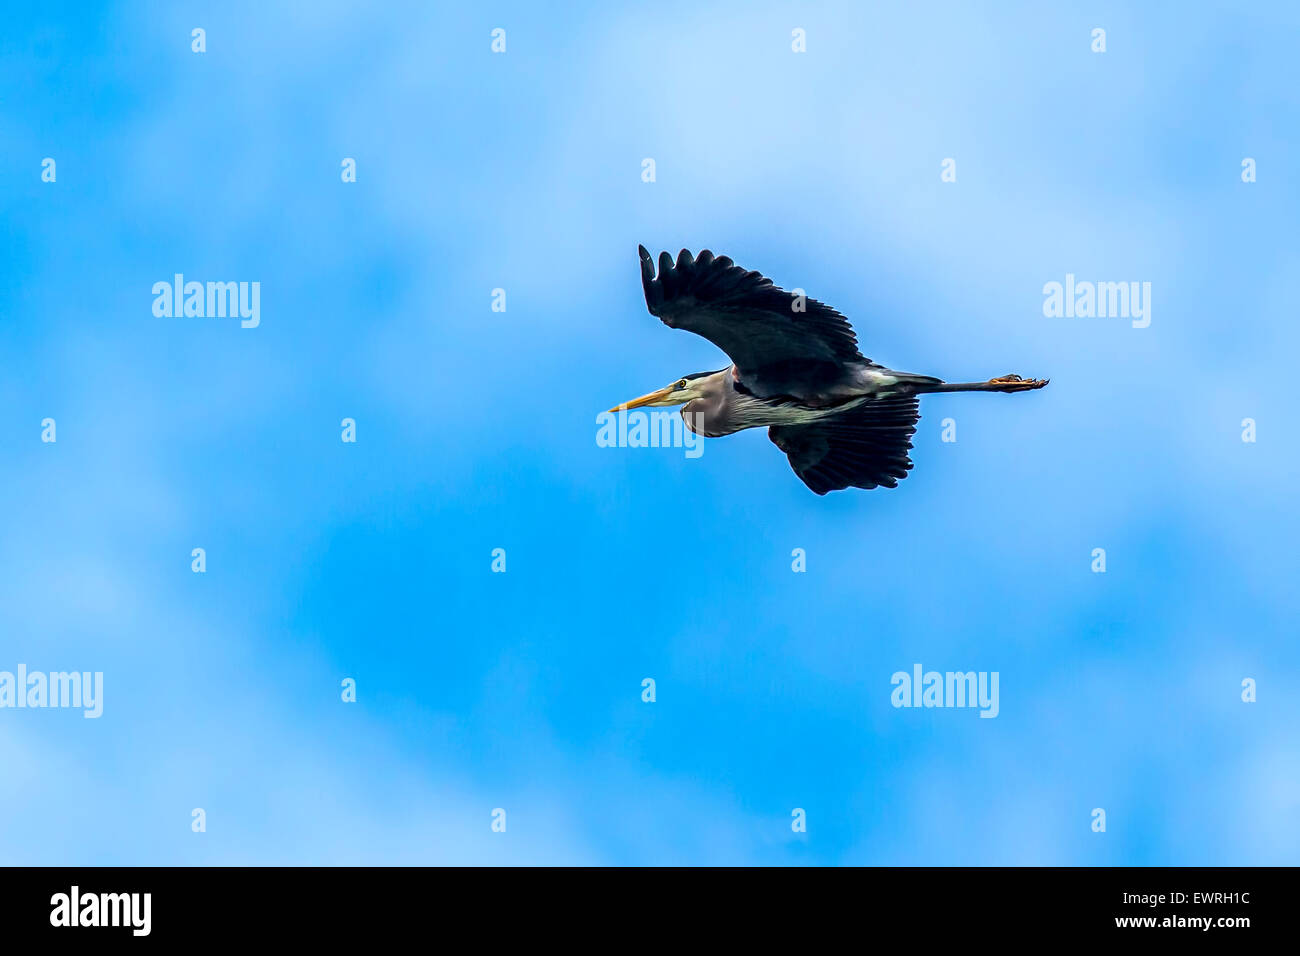 Heron flies in blue sky. Stock Photo